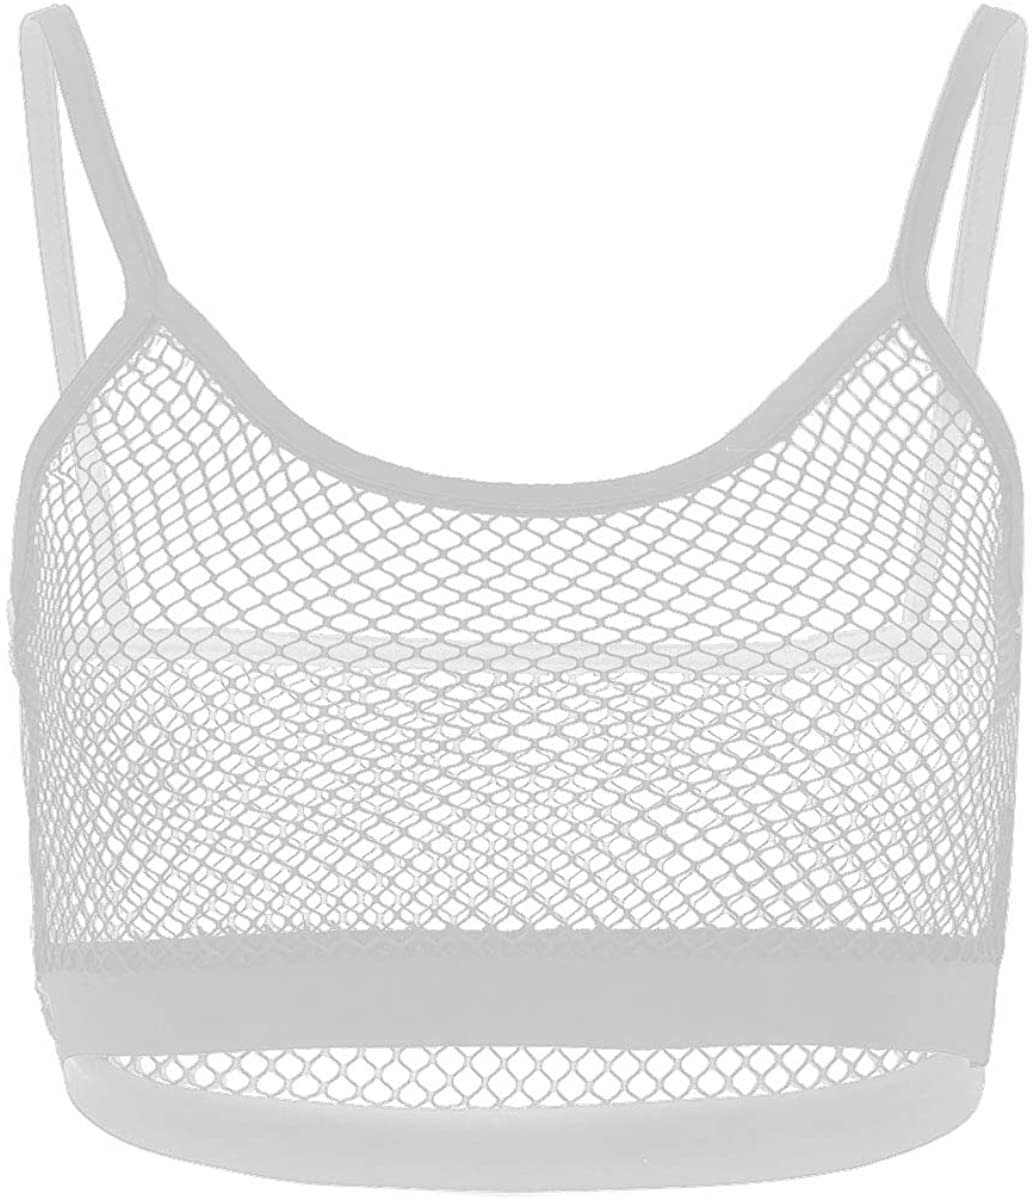 Price:$10.45 inlzdz Women's Lingerie Sheer Mesh Fishnet Tank Tops Vest See Through Strappy Bra Bralette at Amazon Women’s Clothing store